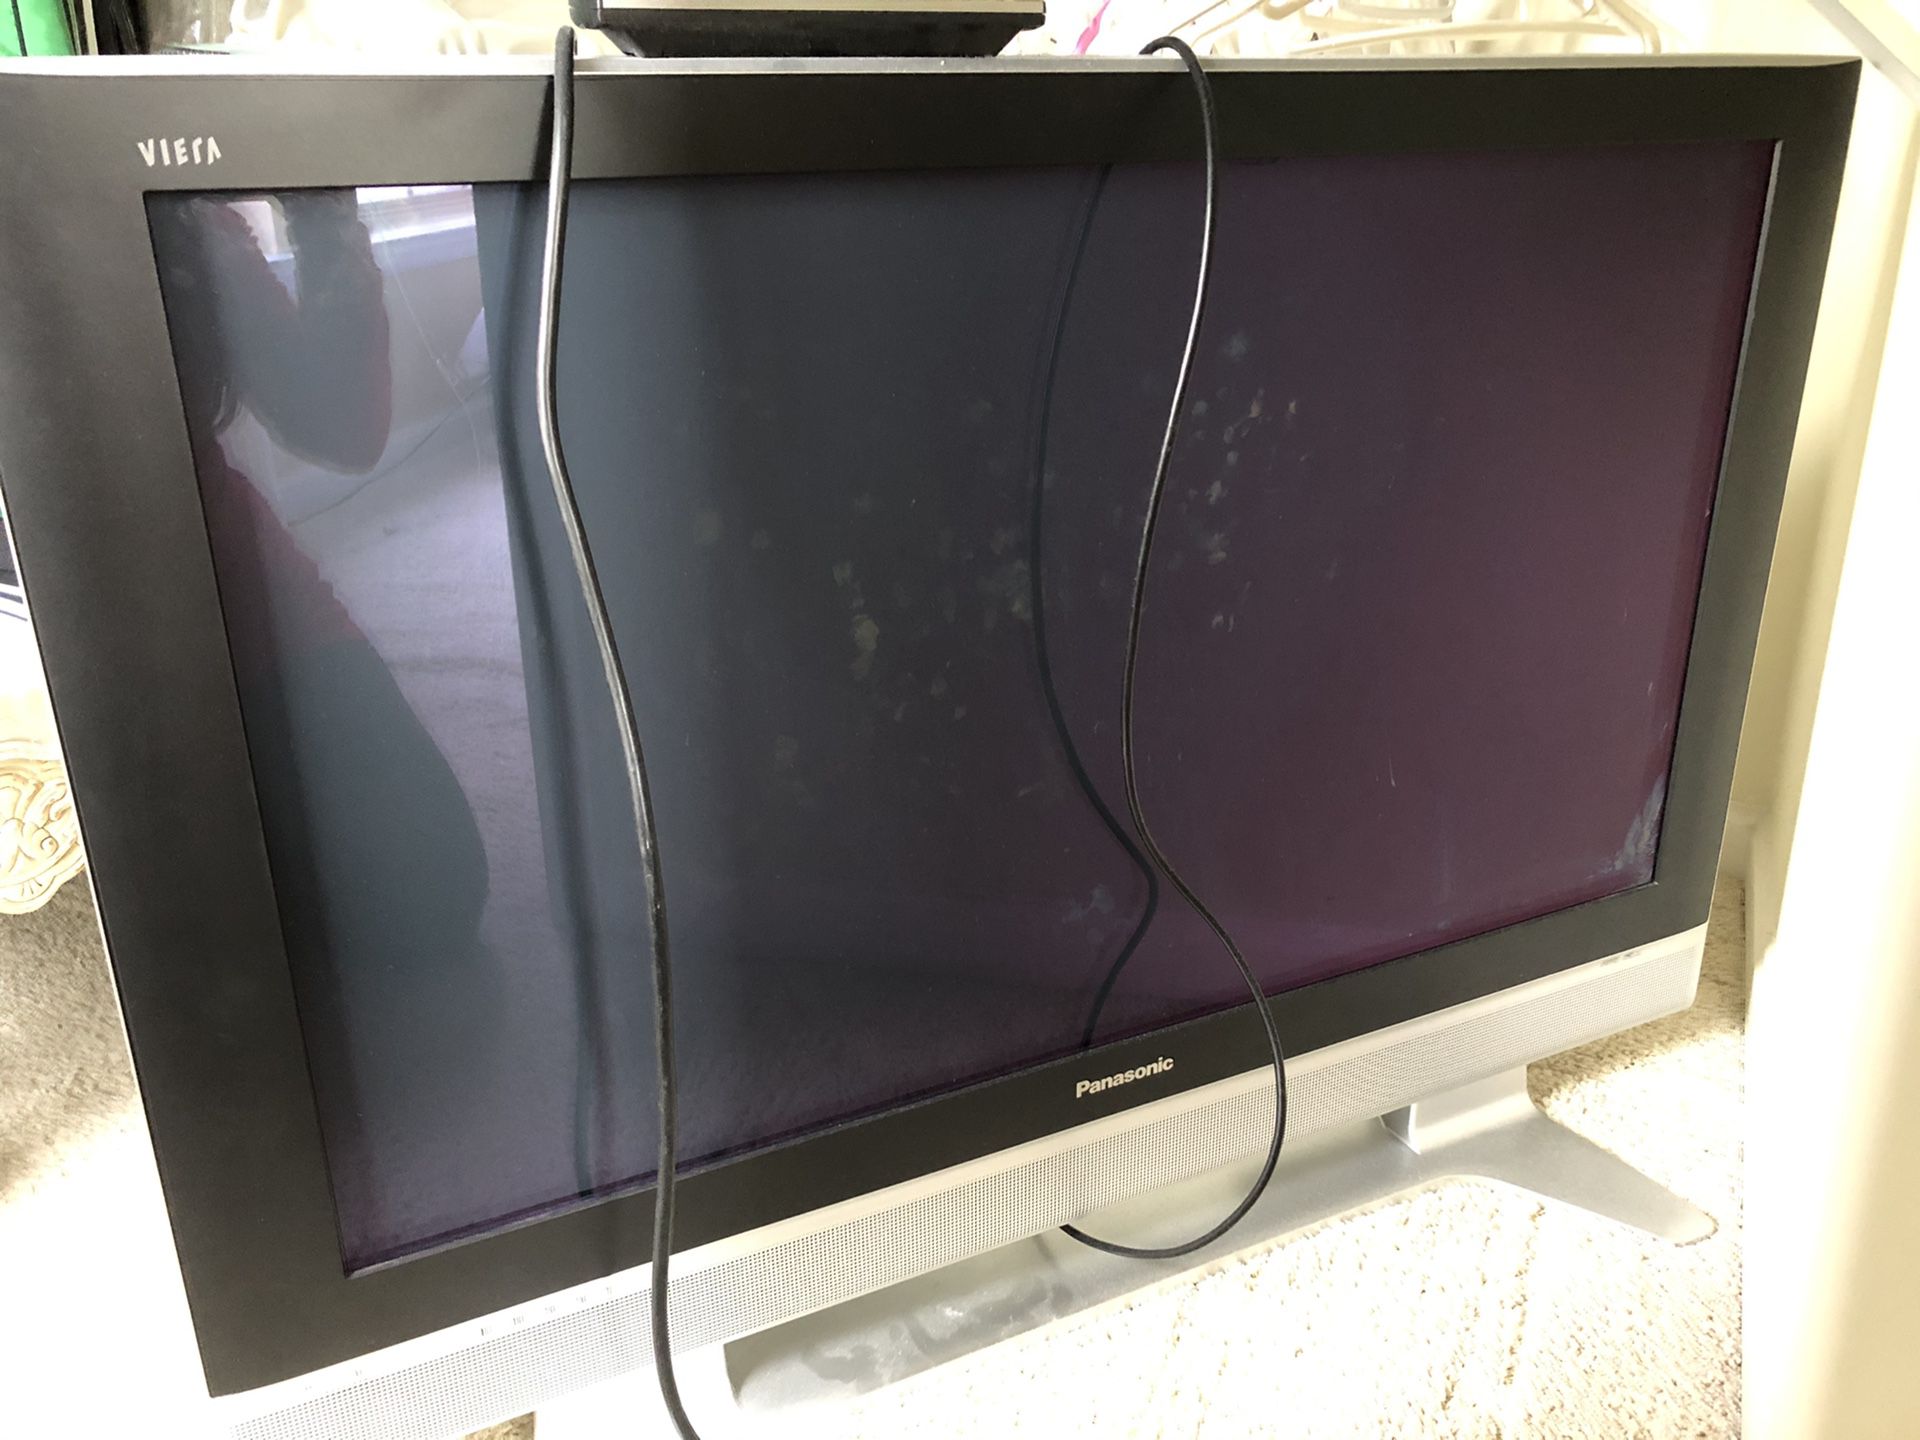 Panasonic 42” High Def Plasma TV on stand & has wall mount brackets installed